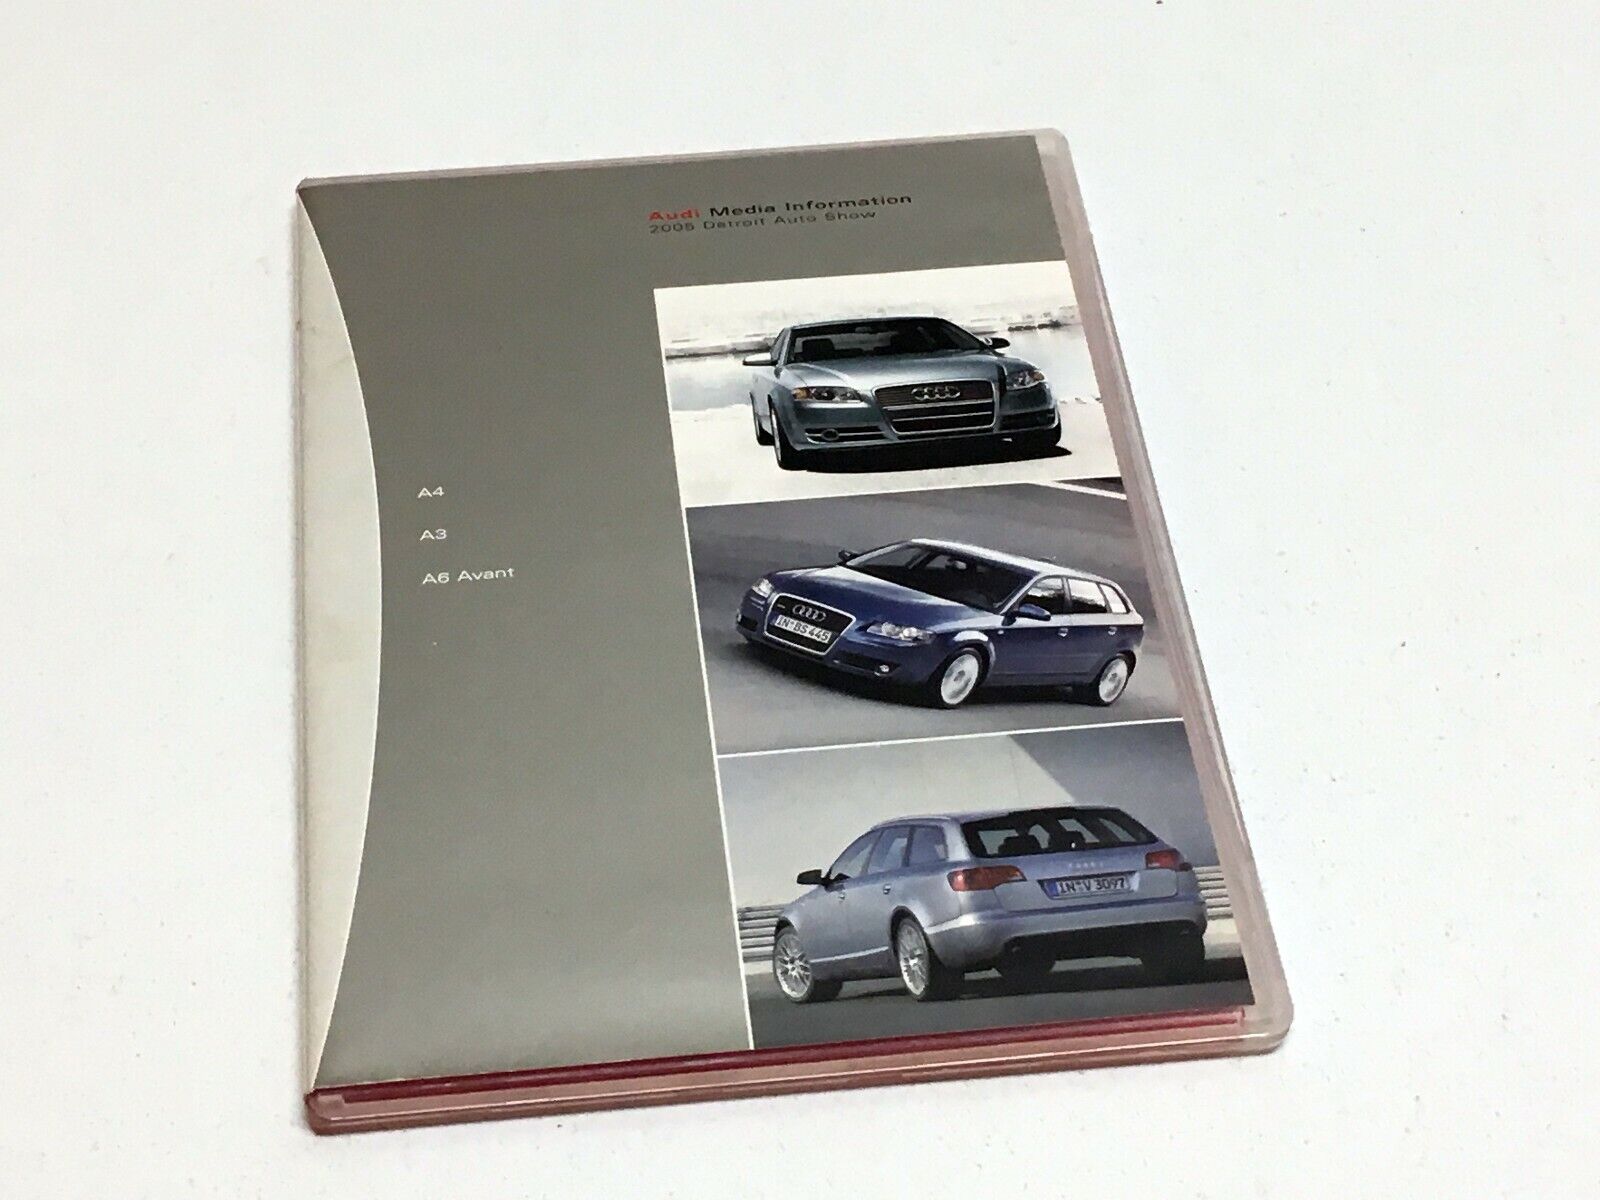 2005 Audi A3 A4 A6 Avant Media Press Information Kit